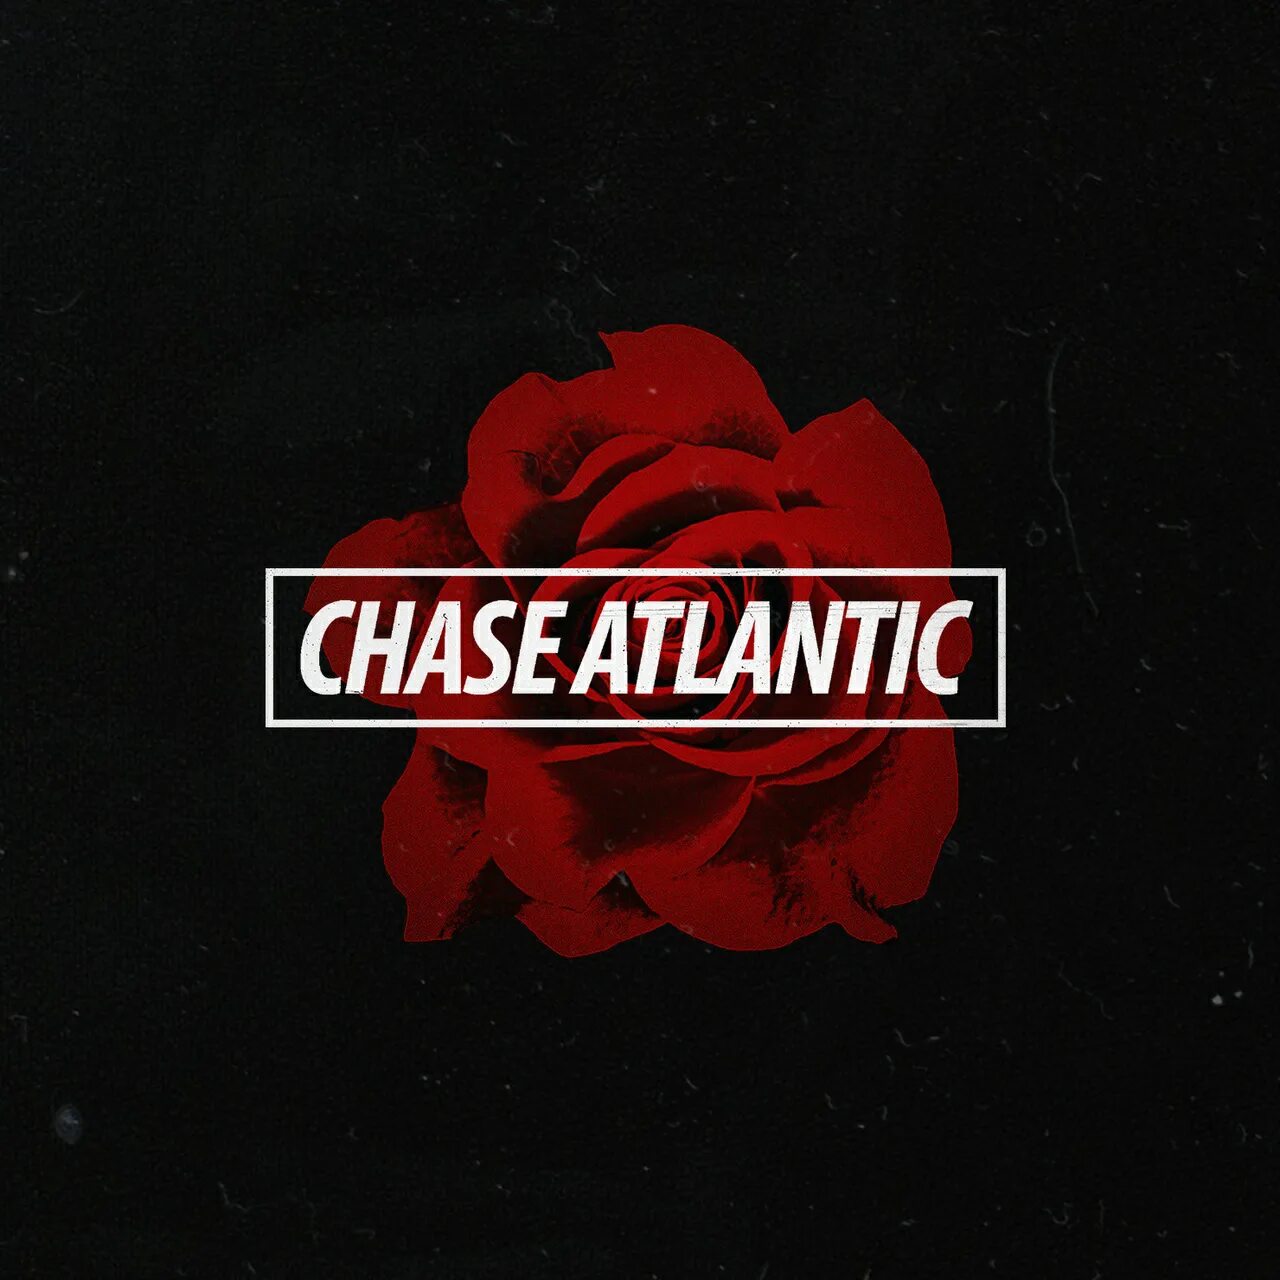 Chase atlantic moonlight. Chase Atlantic обложки альбомов. Группа Чейз Атлантик. Chase Atlantic Swim обложка. Chase Atlantic friends обложка.